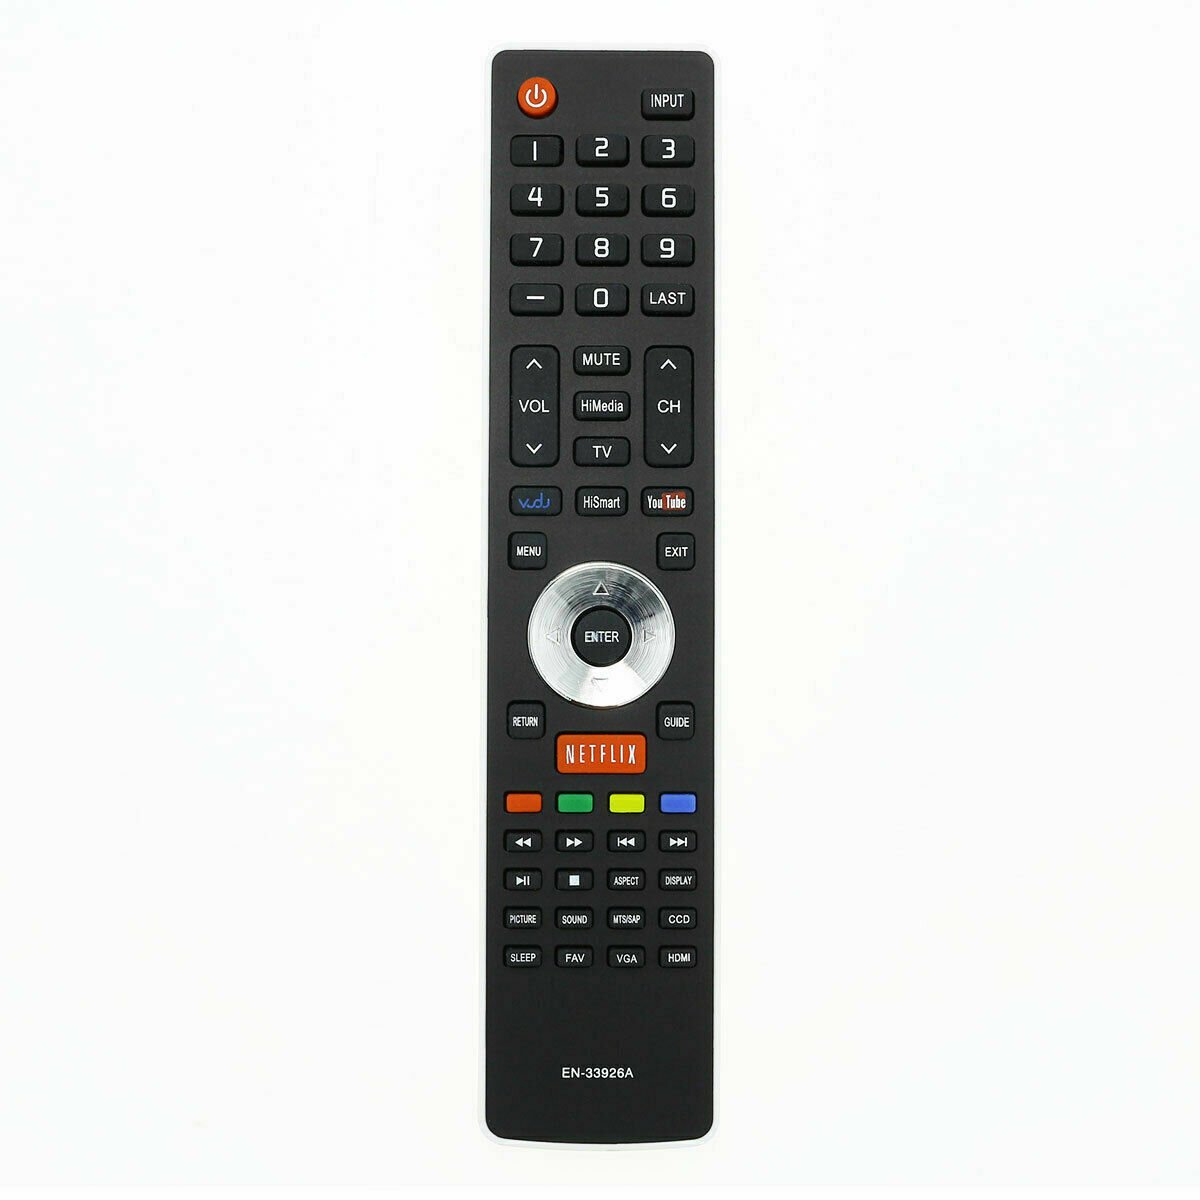 NEW Hisense Replacement Remote Control EN-33926A For Hisense Smart TV